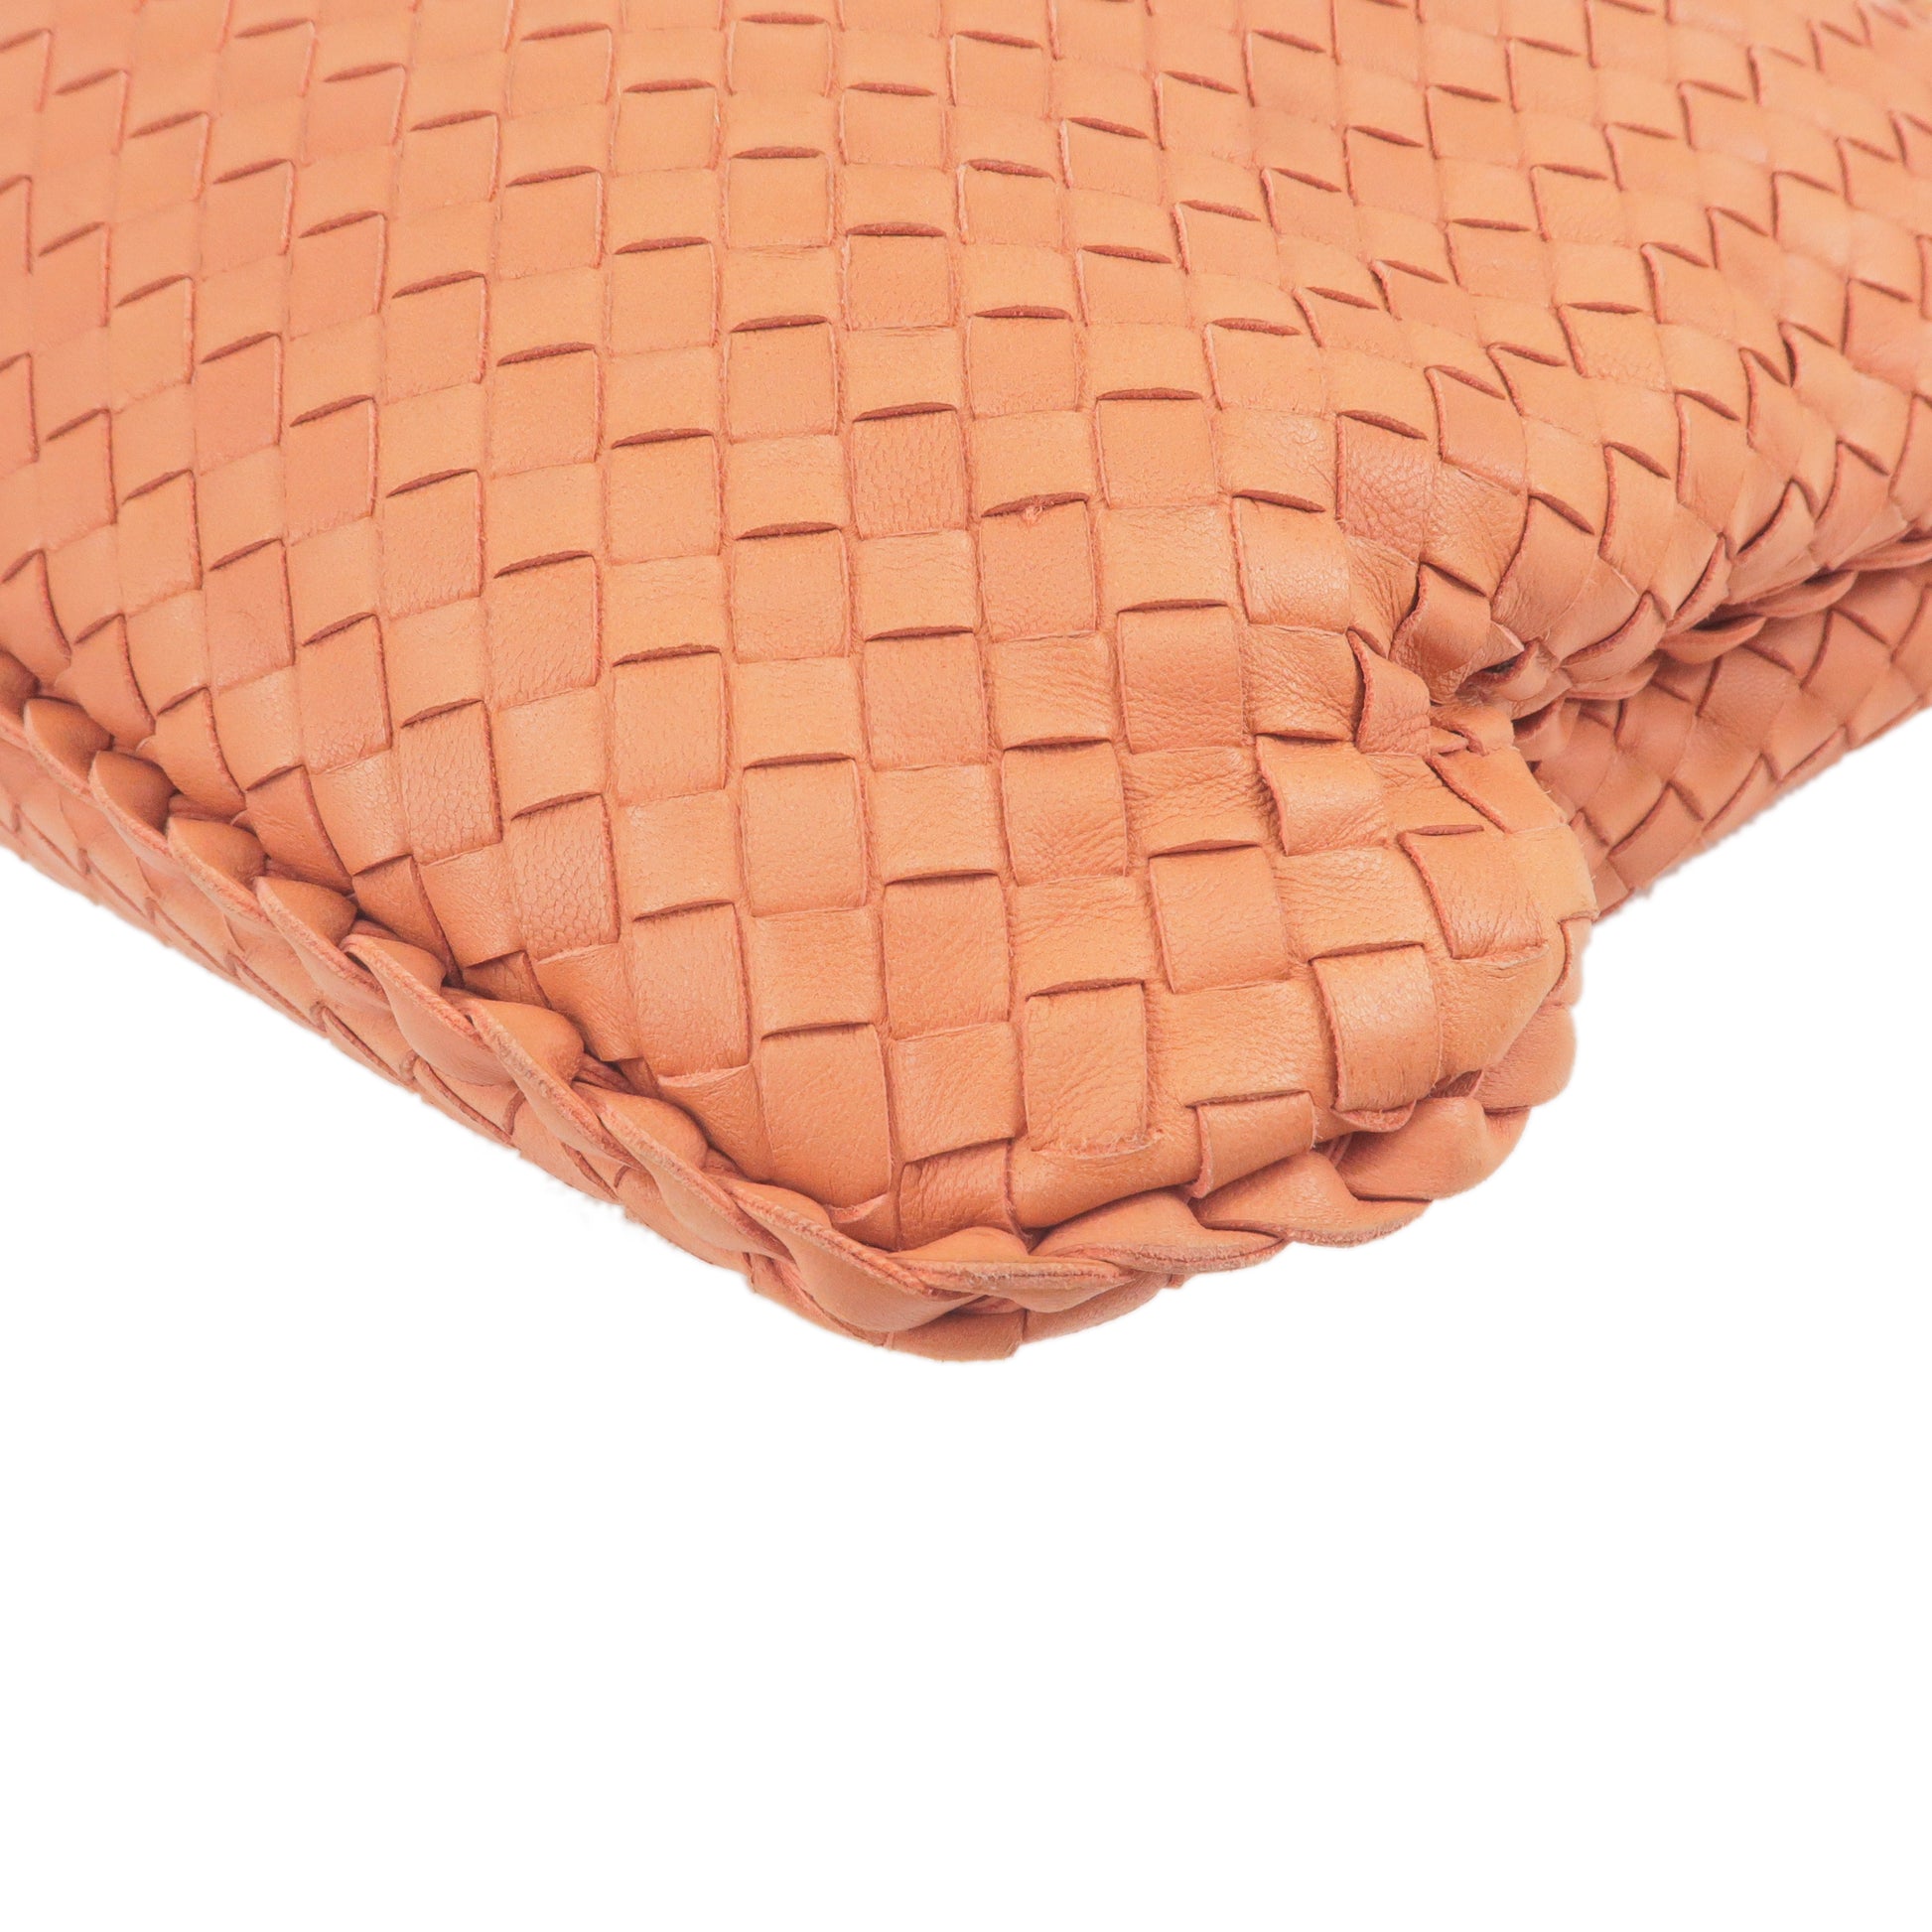 BOTTEGA VENETA Intrechart Leather Shoulder Bag Orange